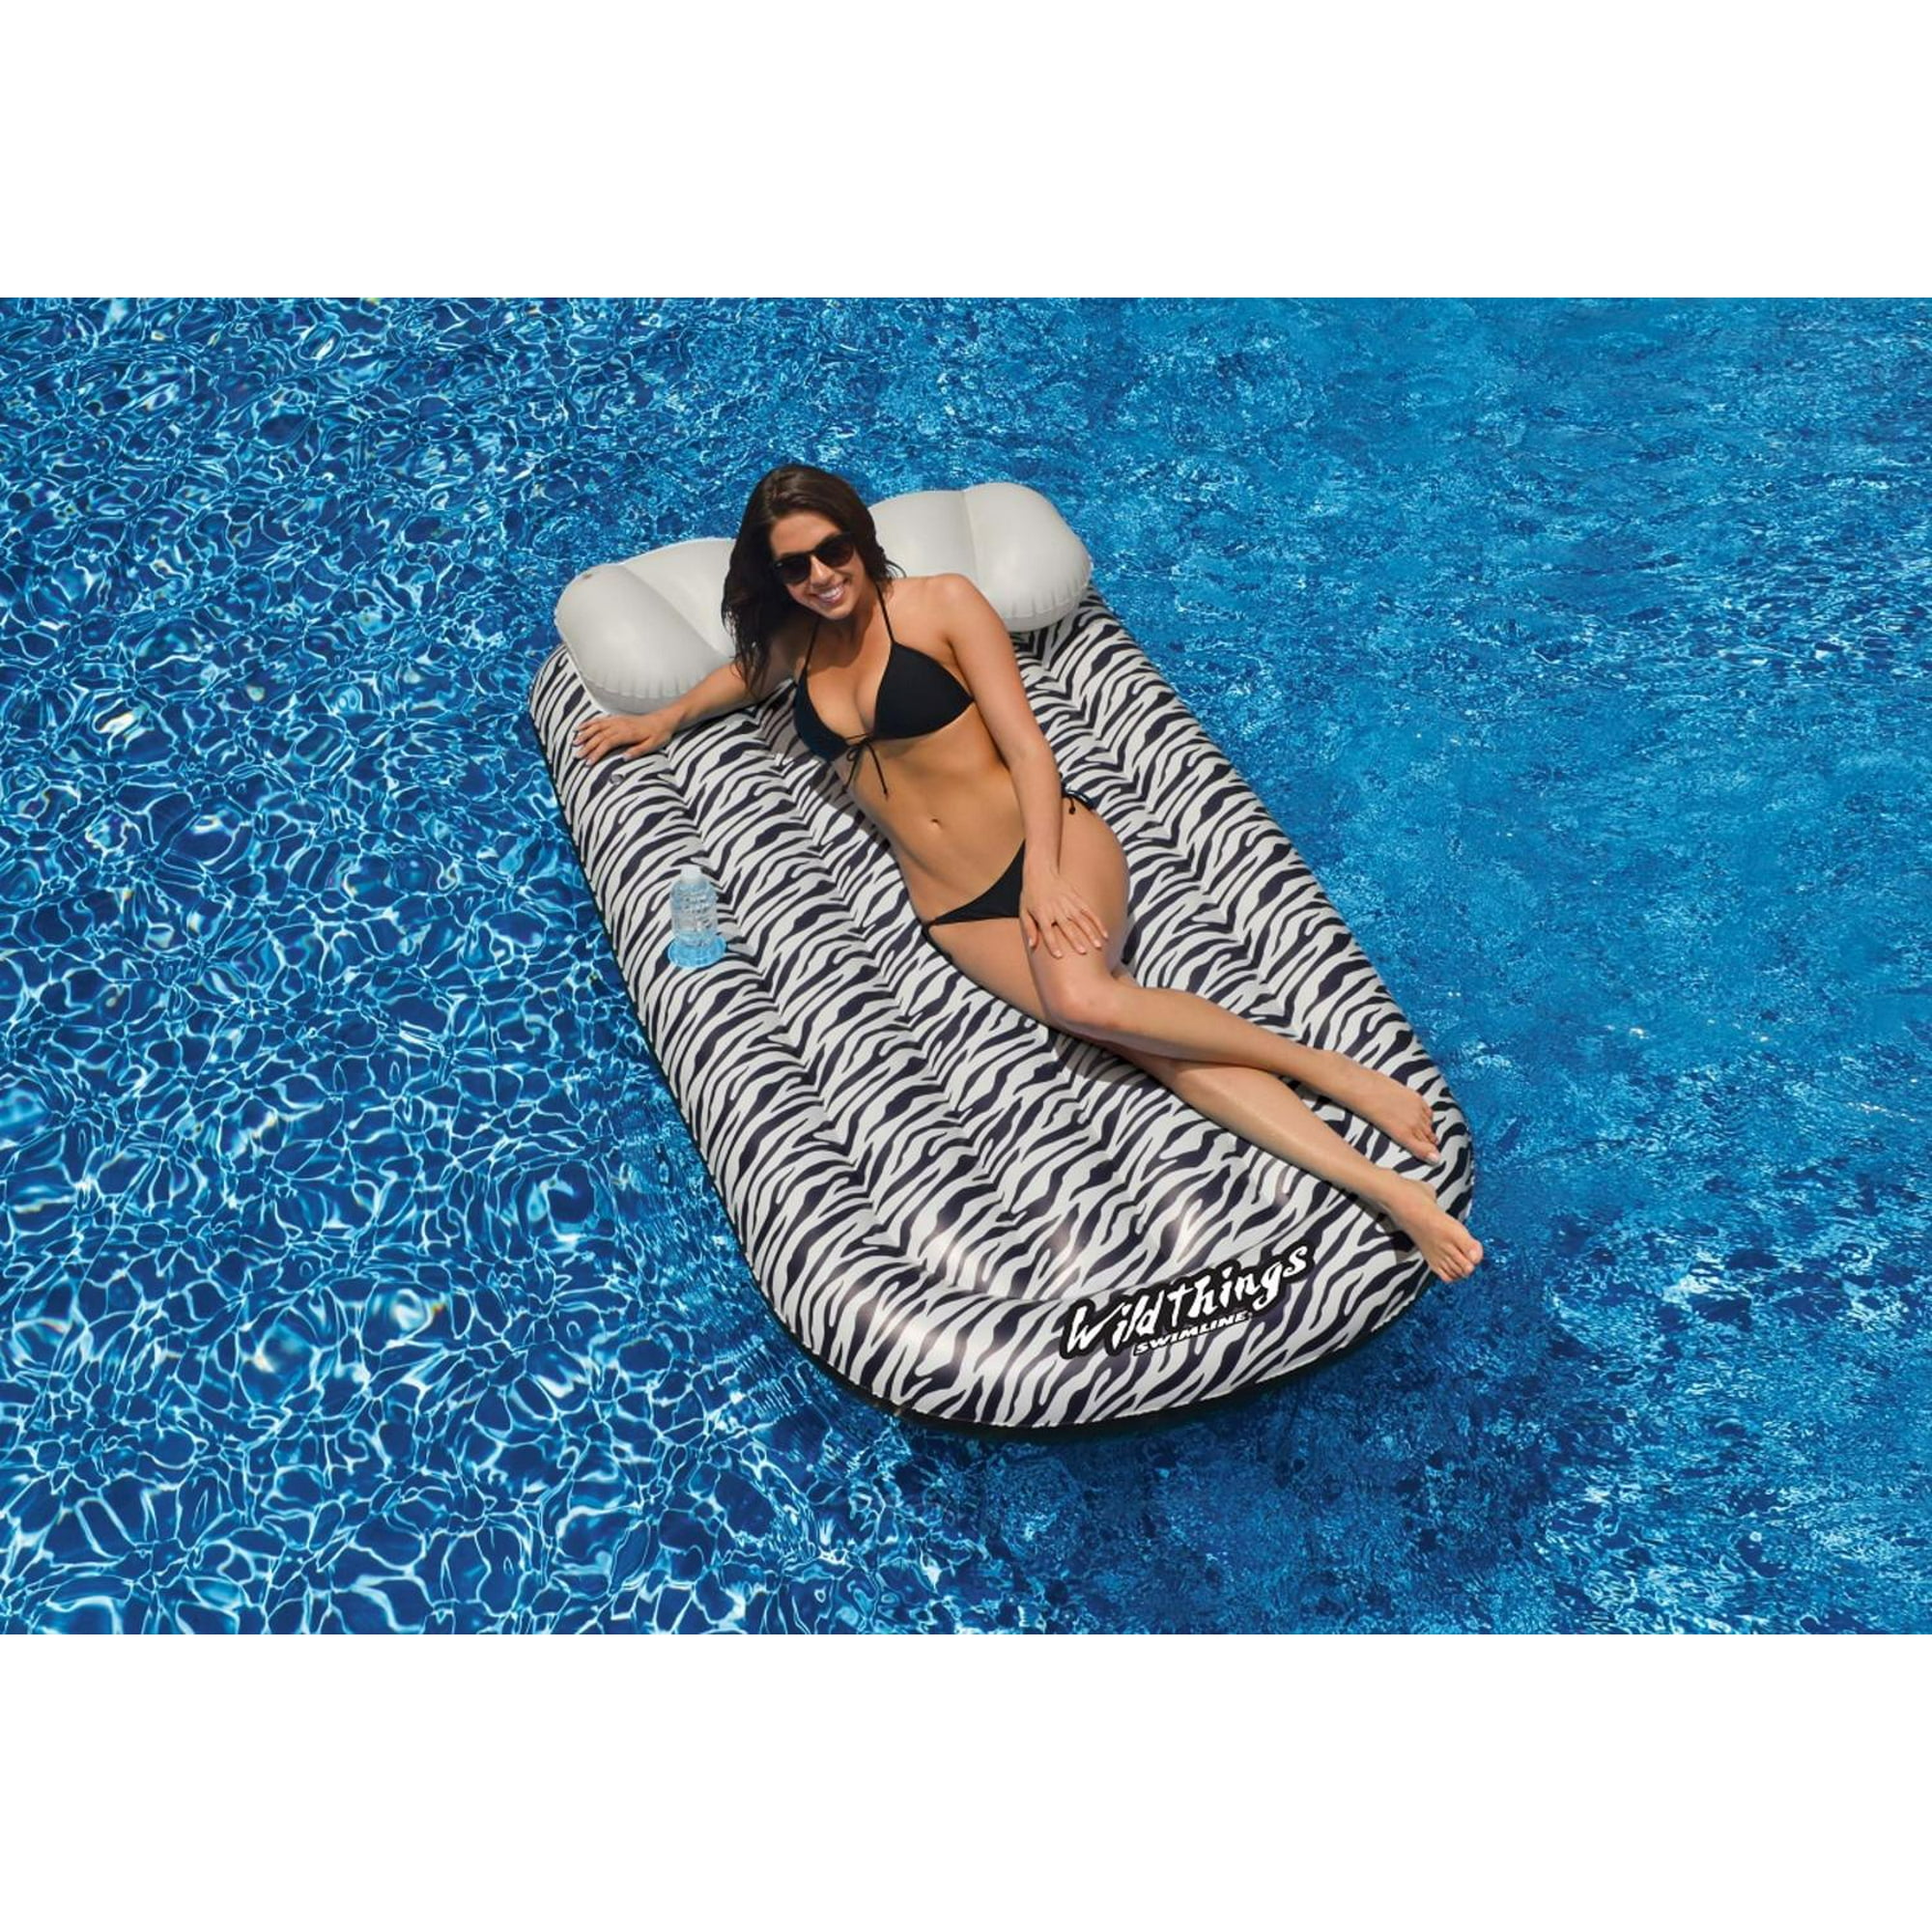 72 Wild Things Zebra Print Inflatable Swimming Pool Lounger Raft